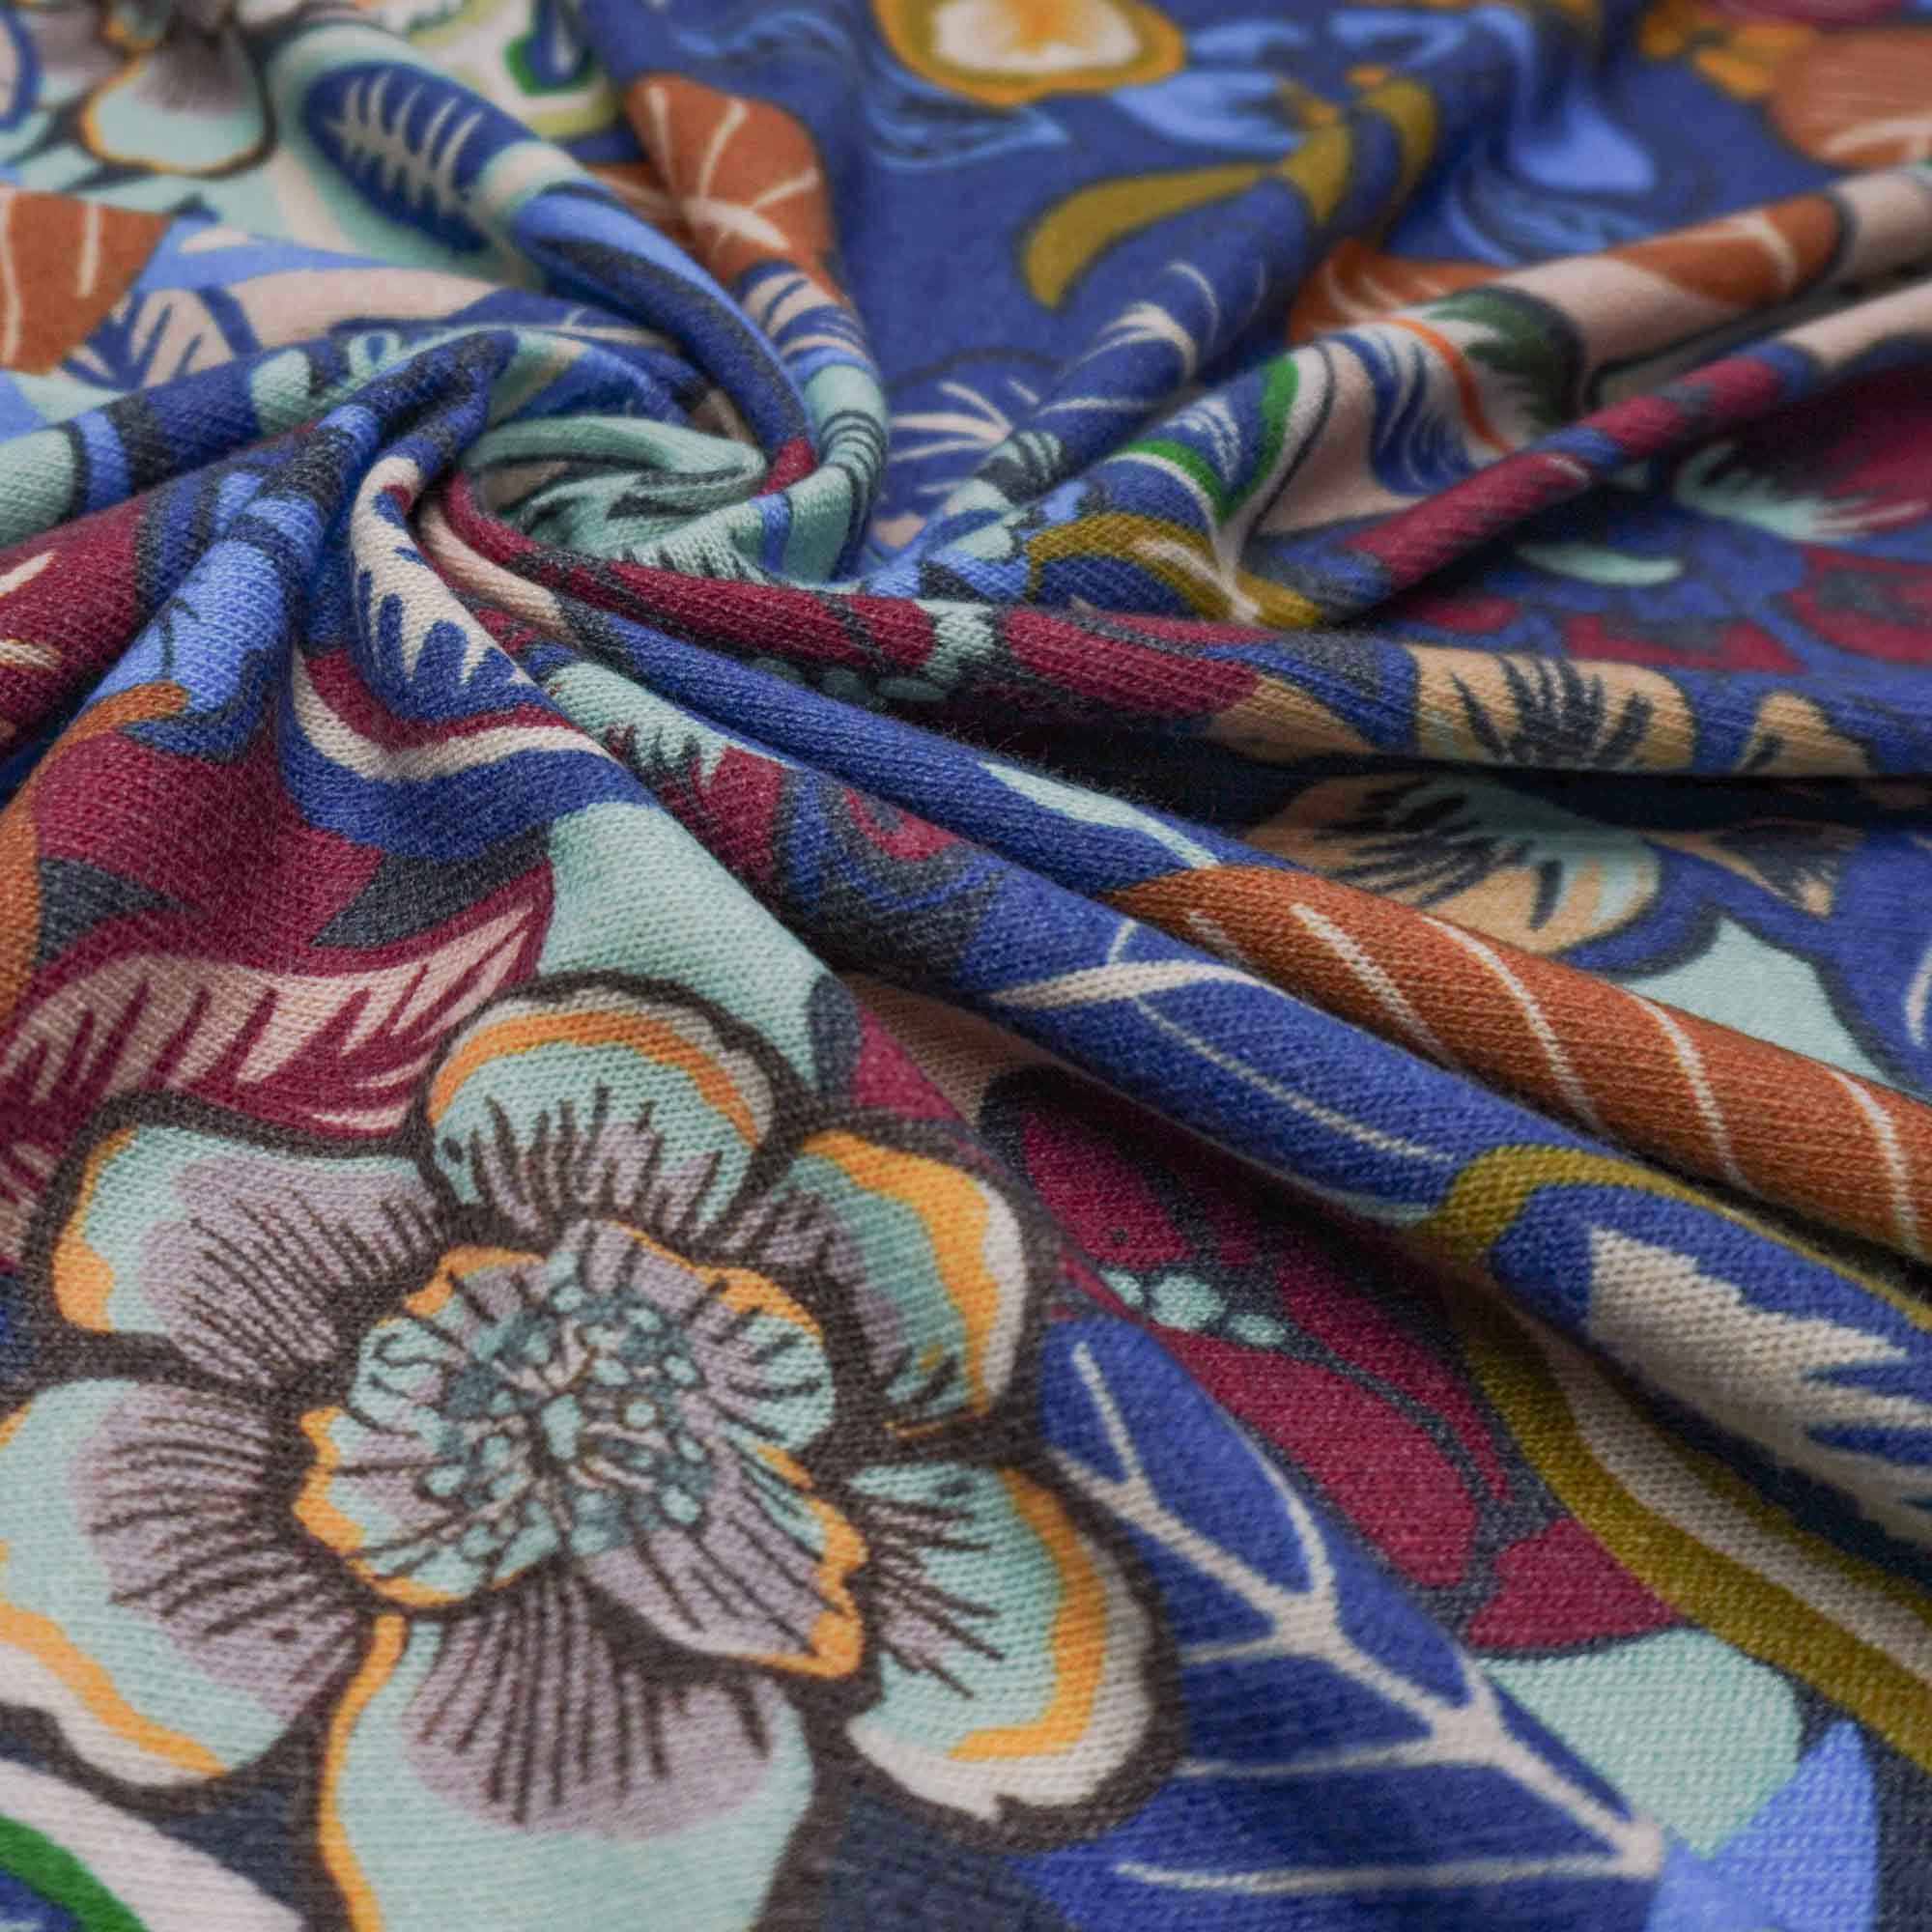 Tecido malha tricot estampado floral (tecido italiano legitímo)